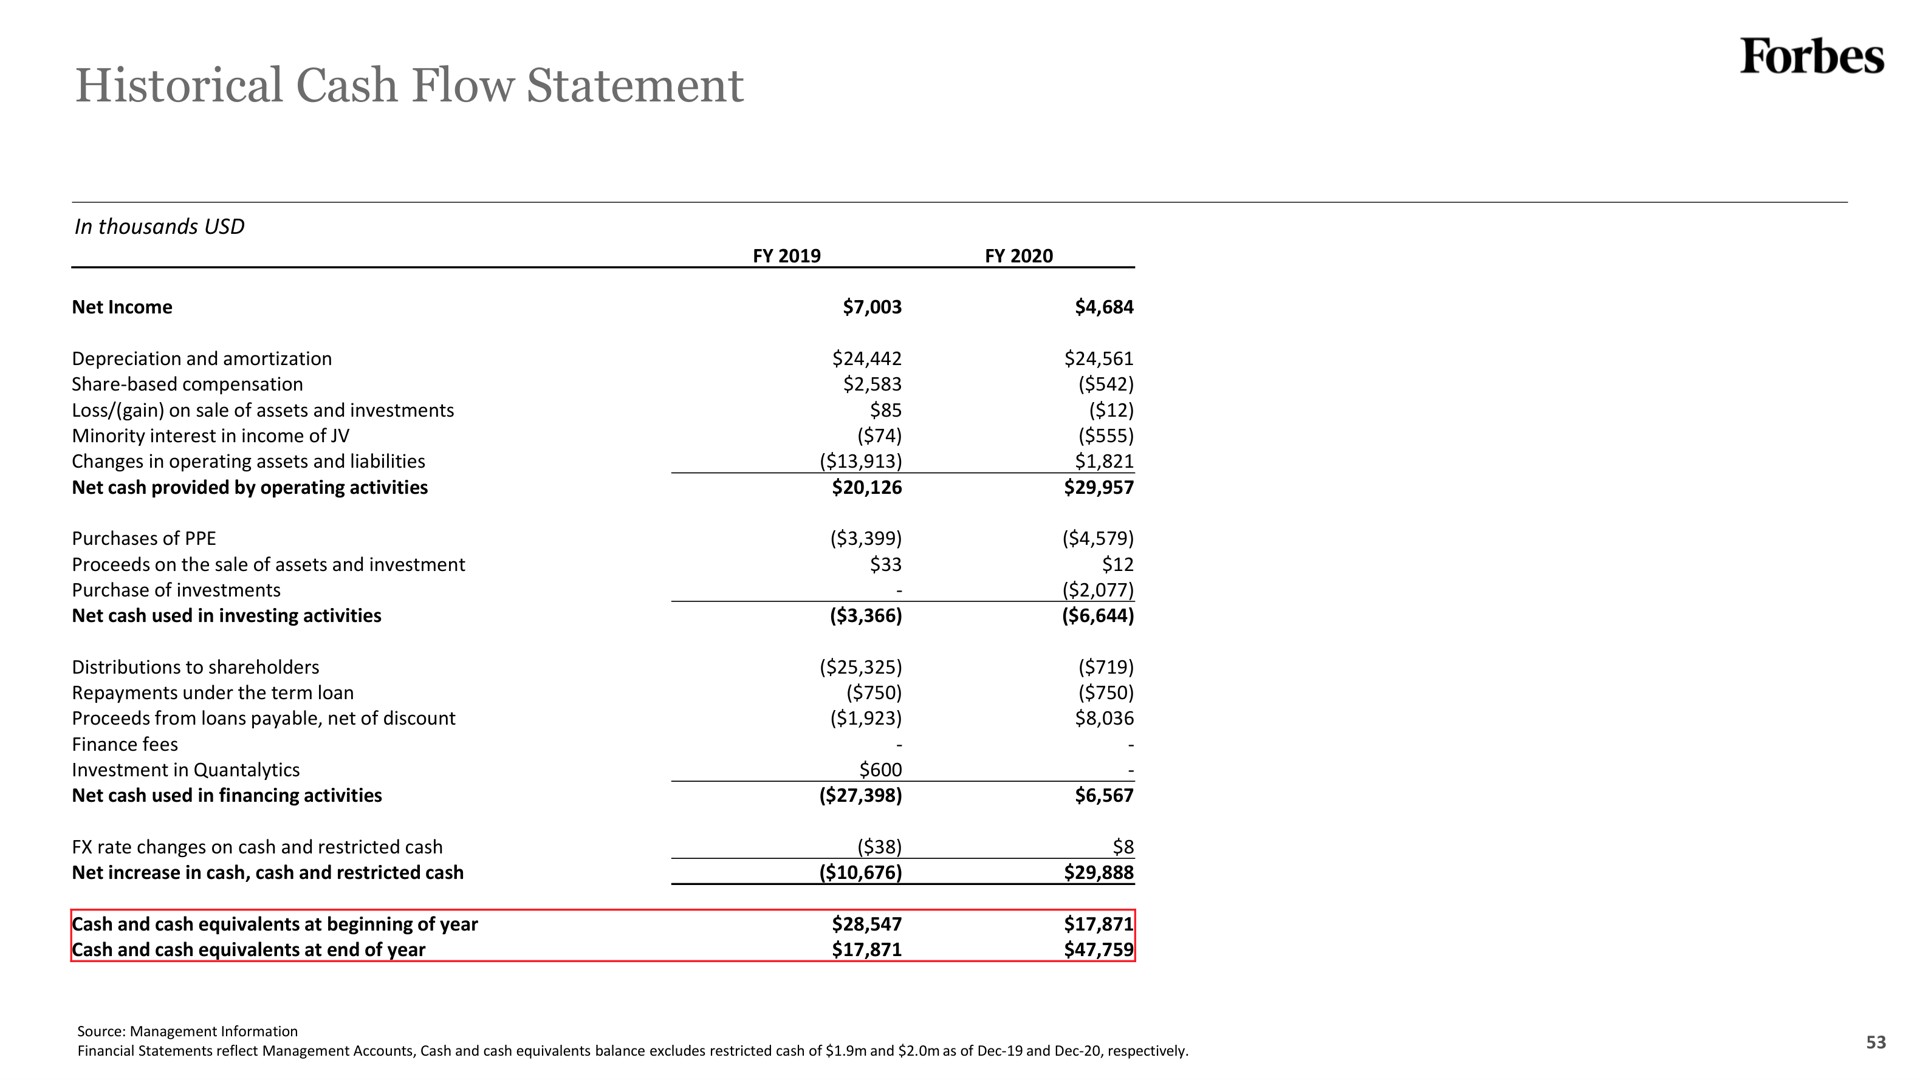 historical cash flow statement | Forbes